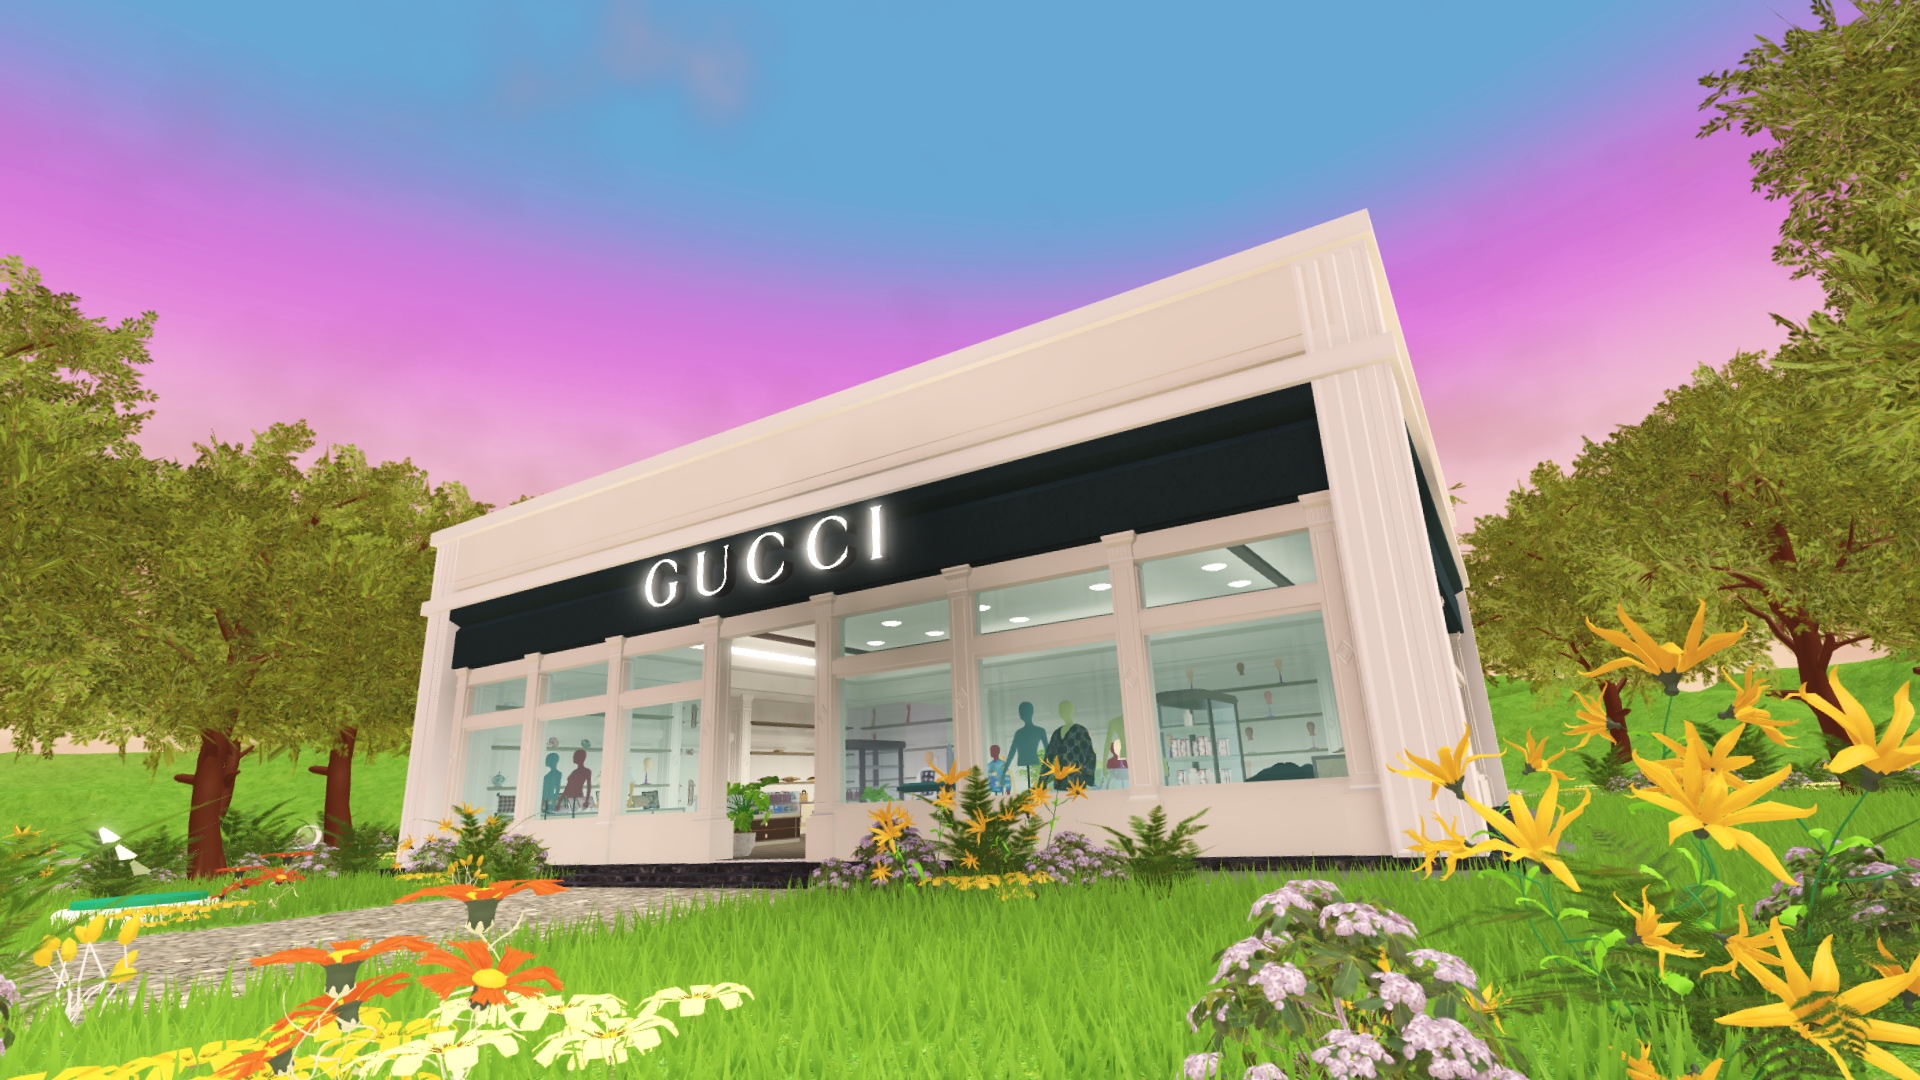 Gucci-Town-on-Roblex-11-2163153957.jpg